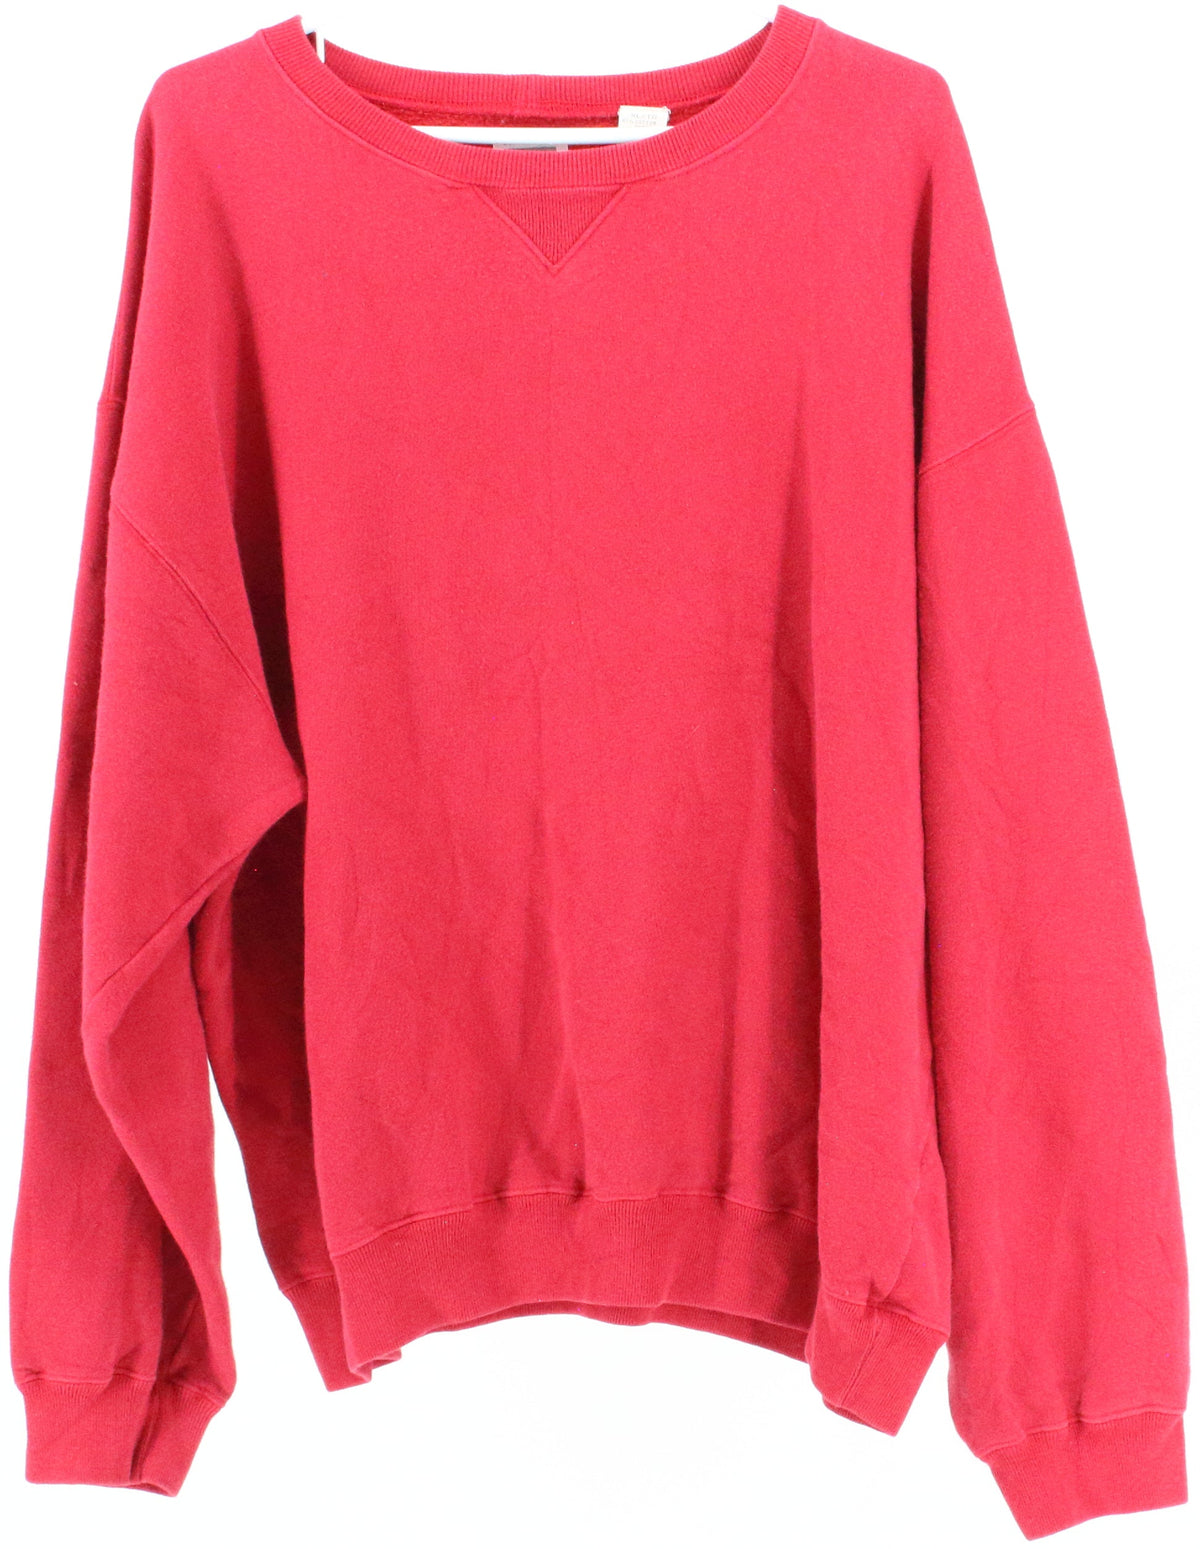 Athletic Gap Sweats Red Plain Sweatshirt